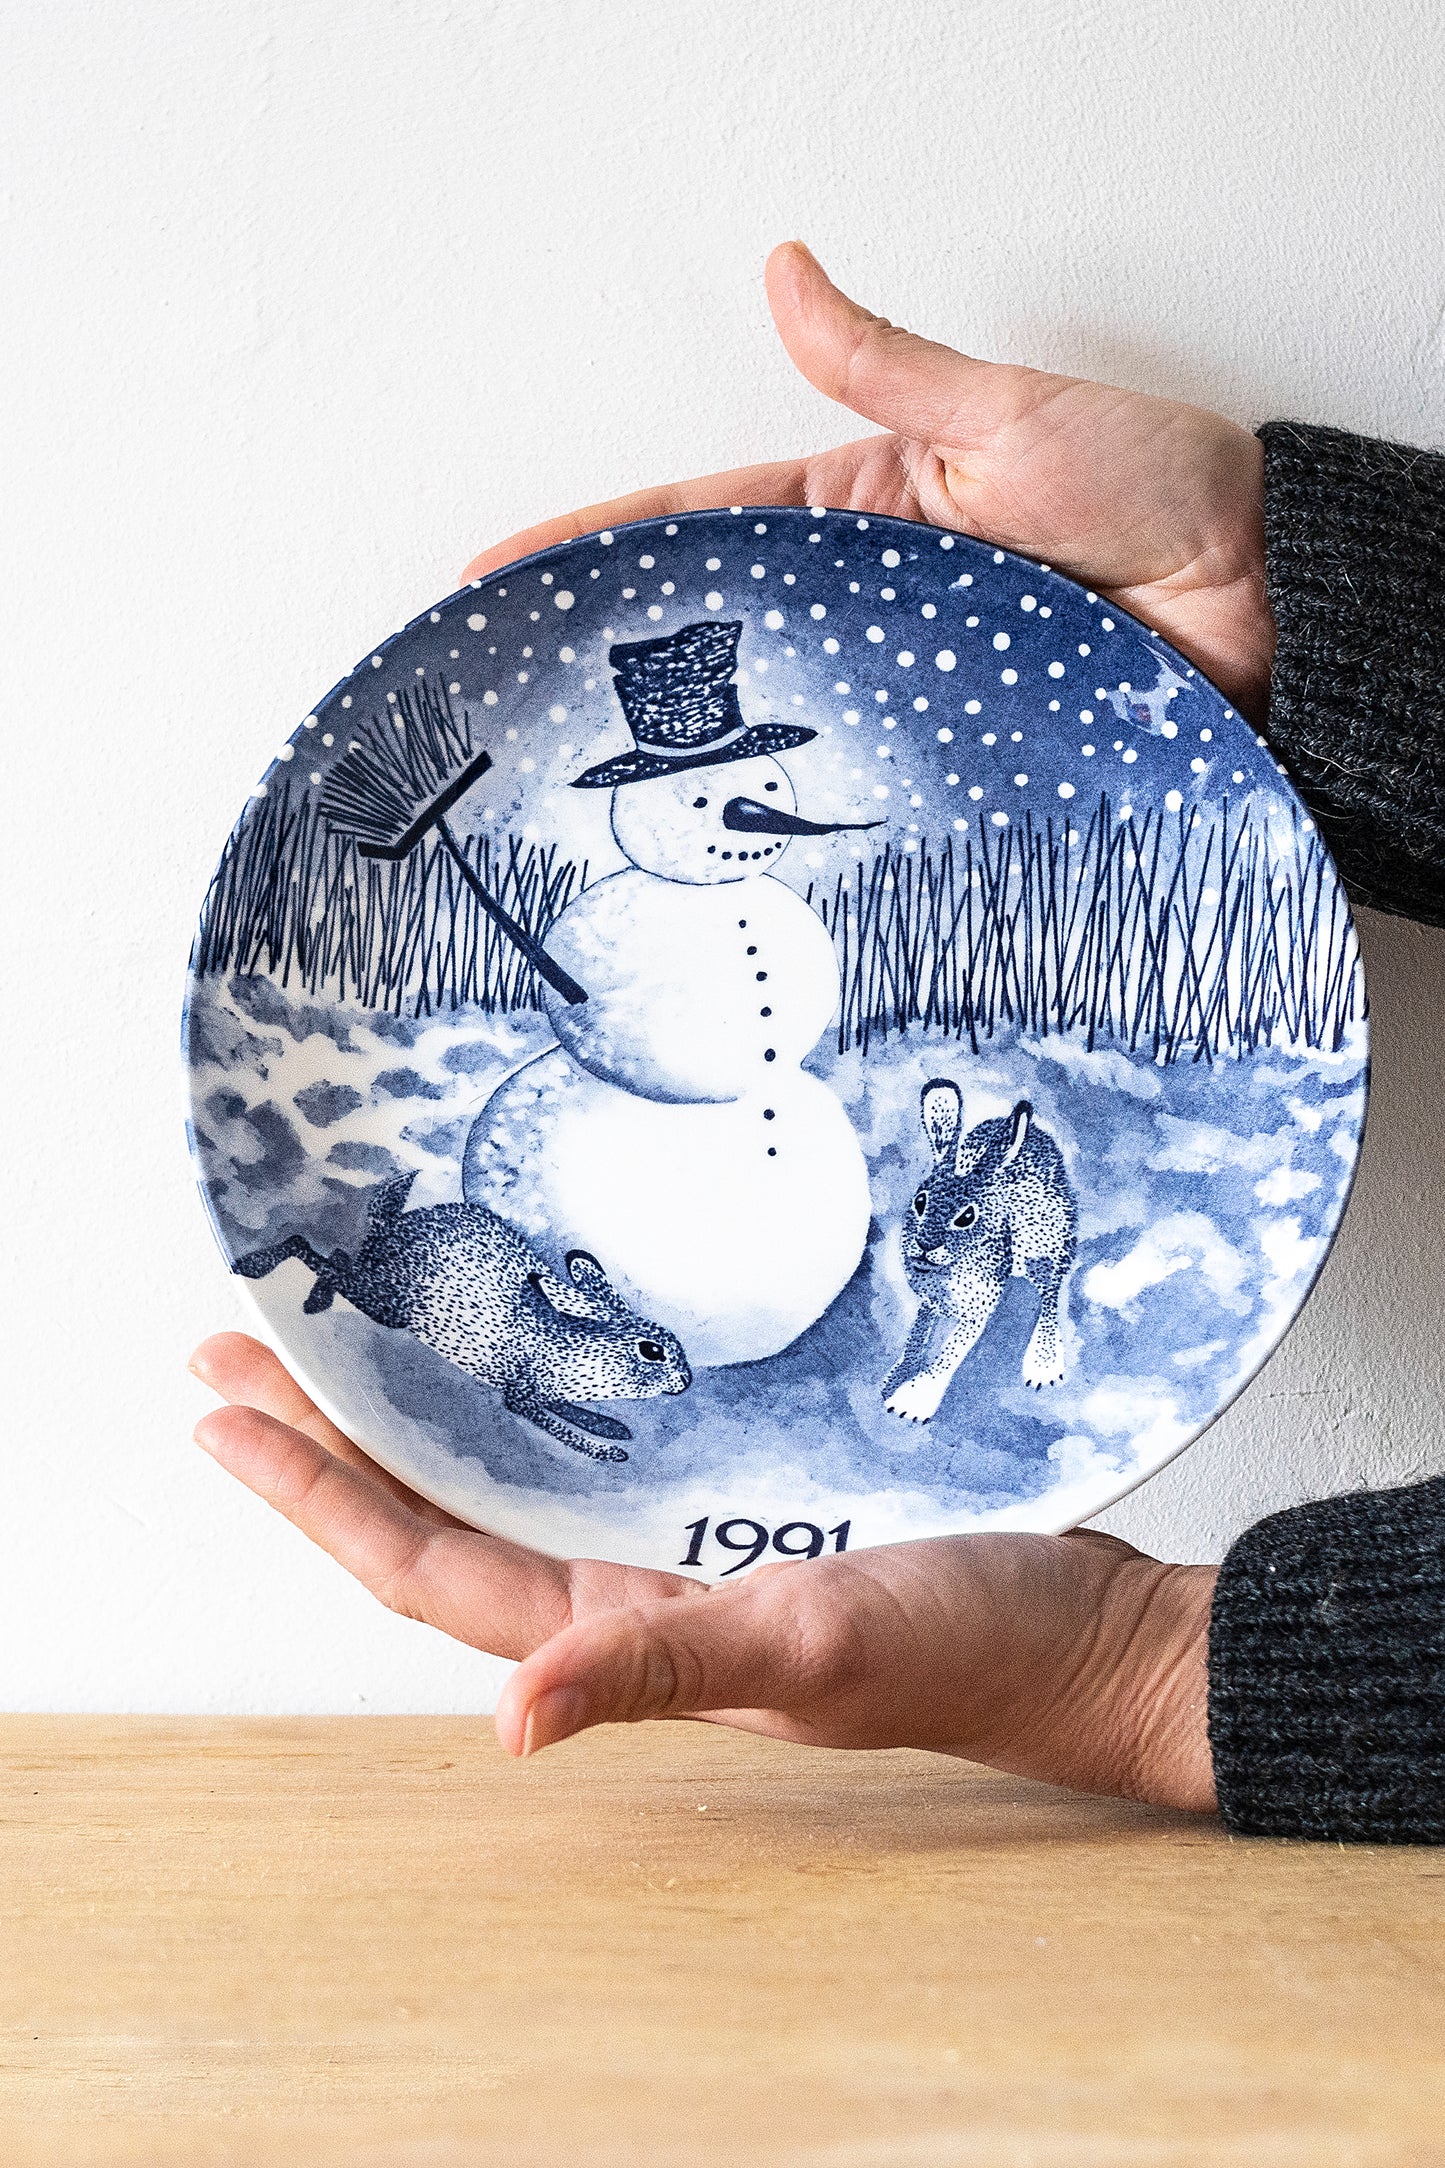 Danish Porcelain Plate